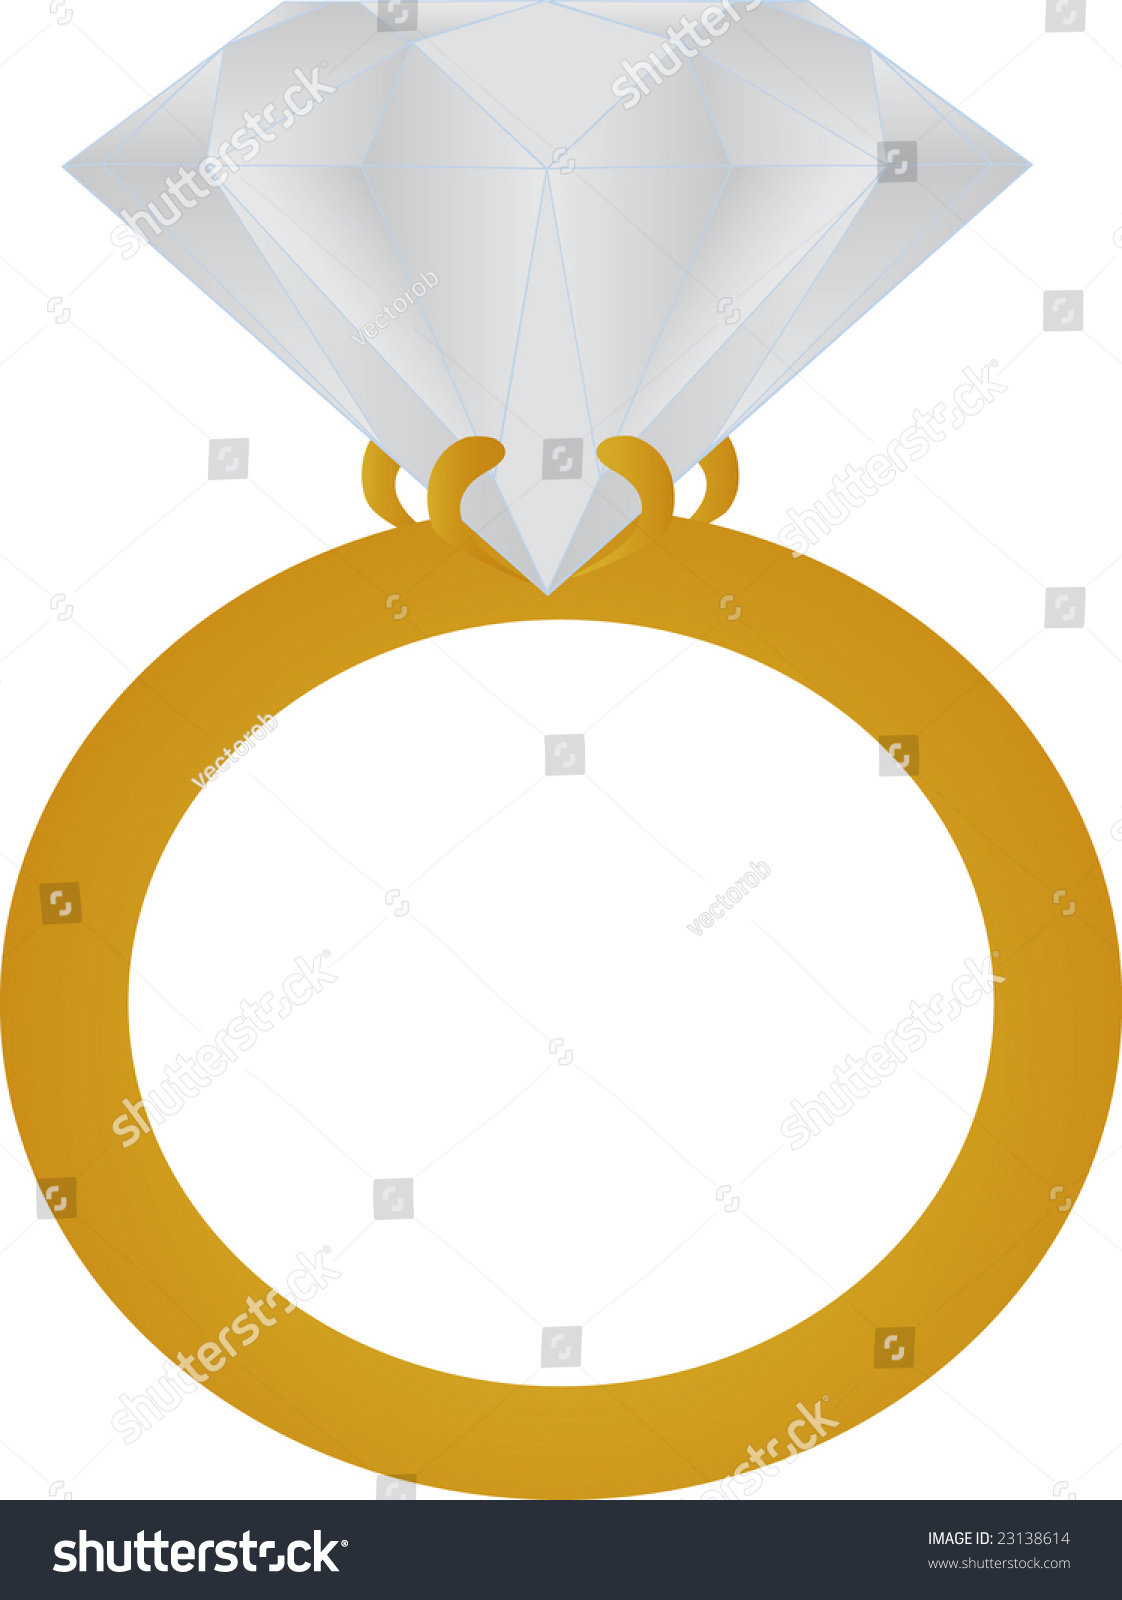 Diamond Ring Vector - 23138614 : Shutterstock